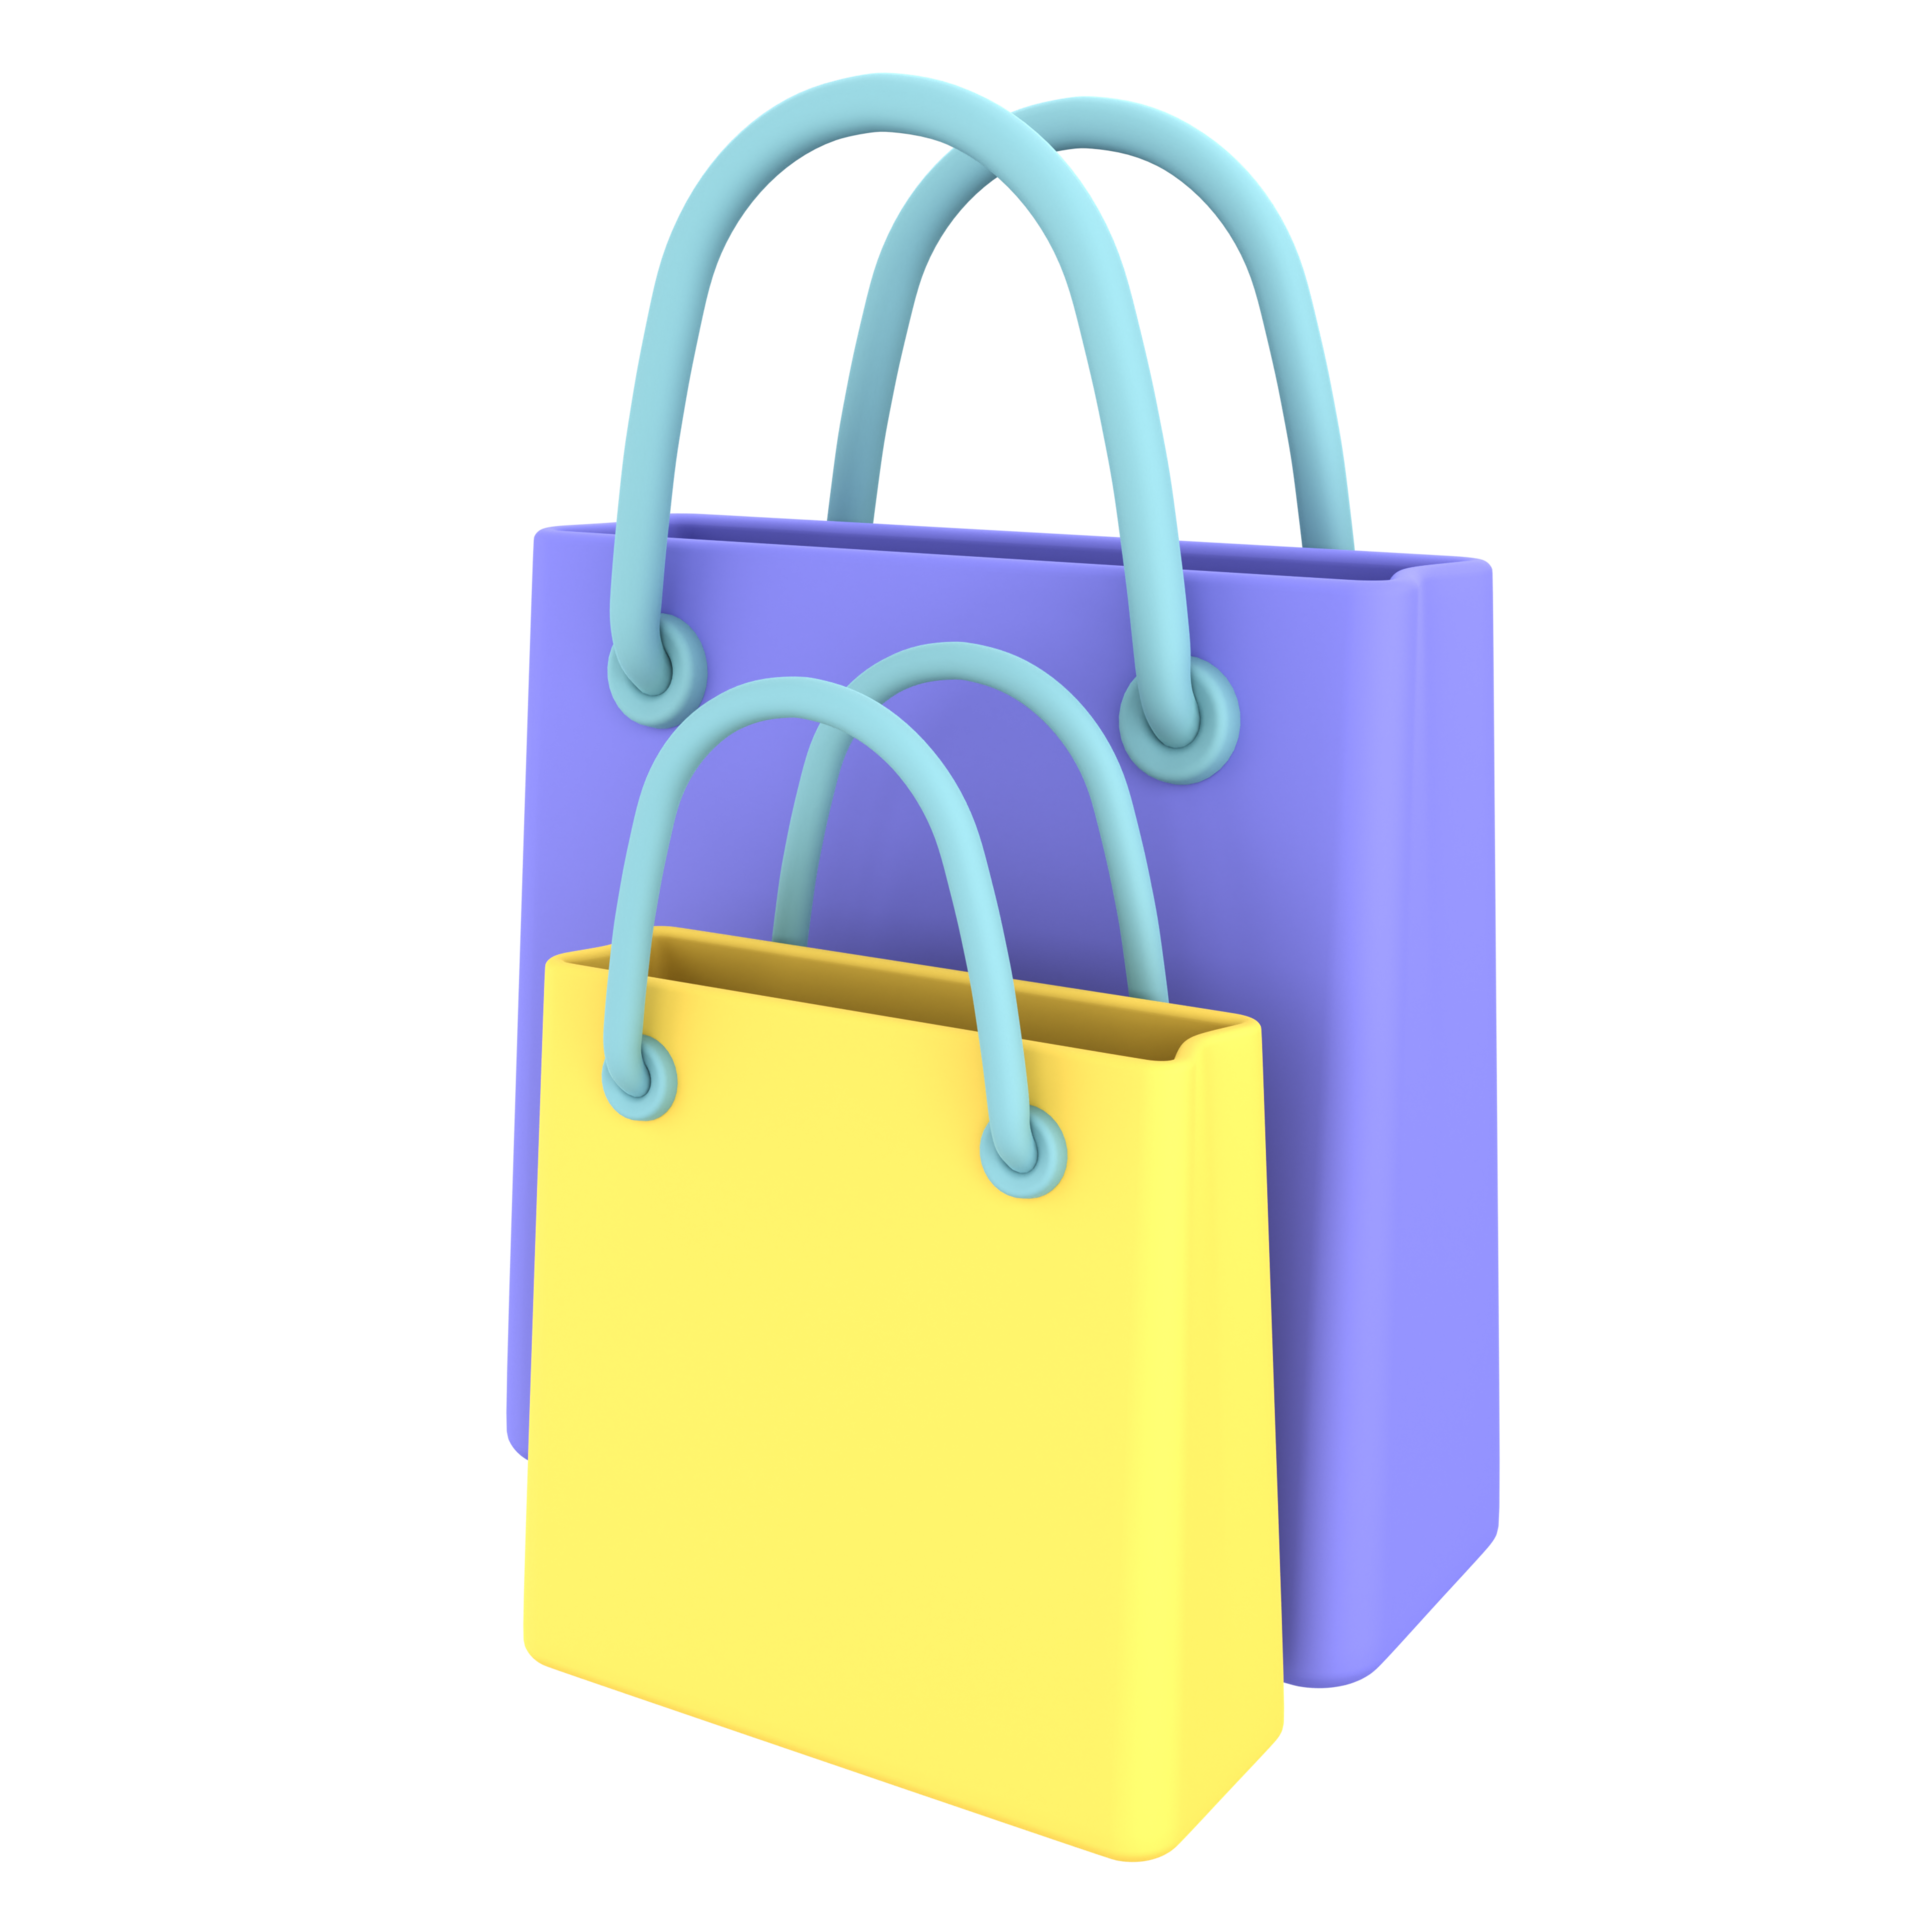 Emoji a sad brown paper bag or color Royalty Free Vector